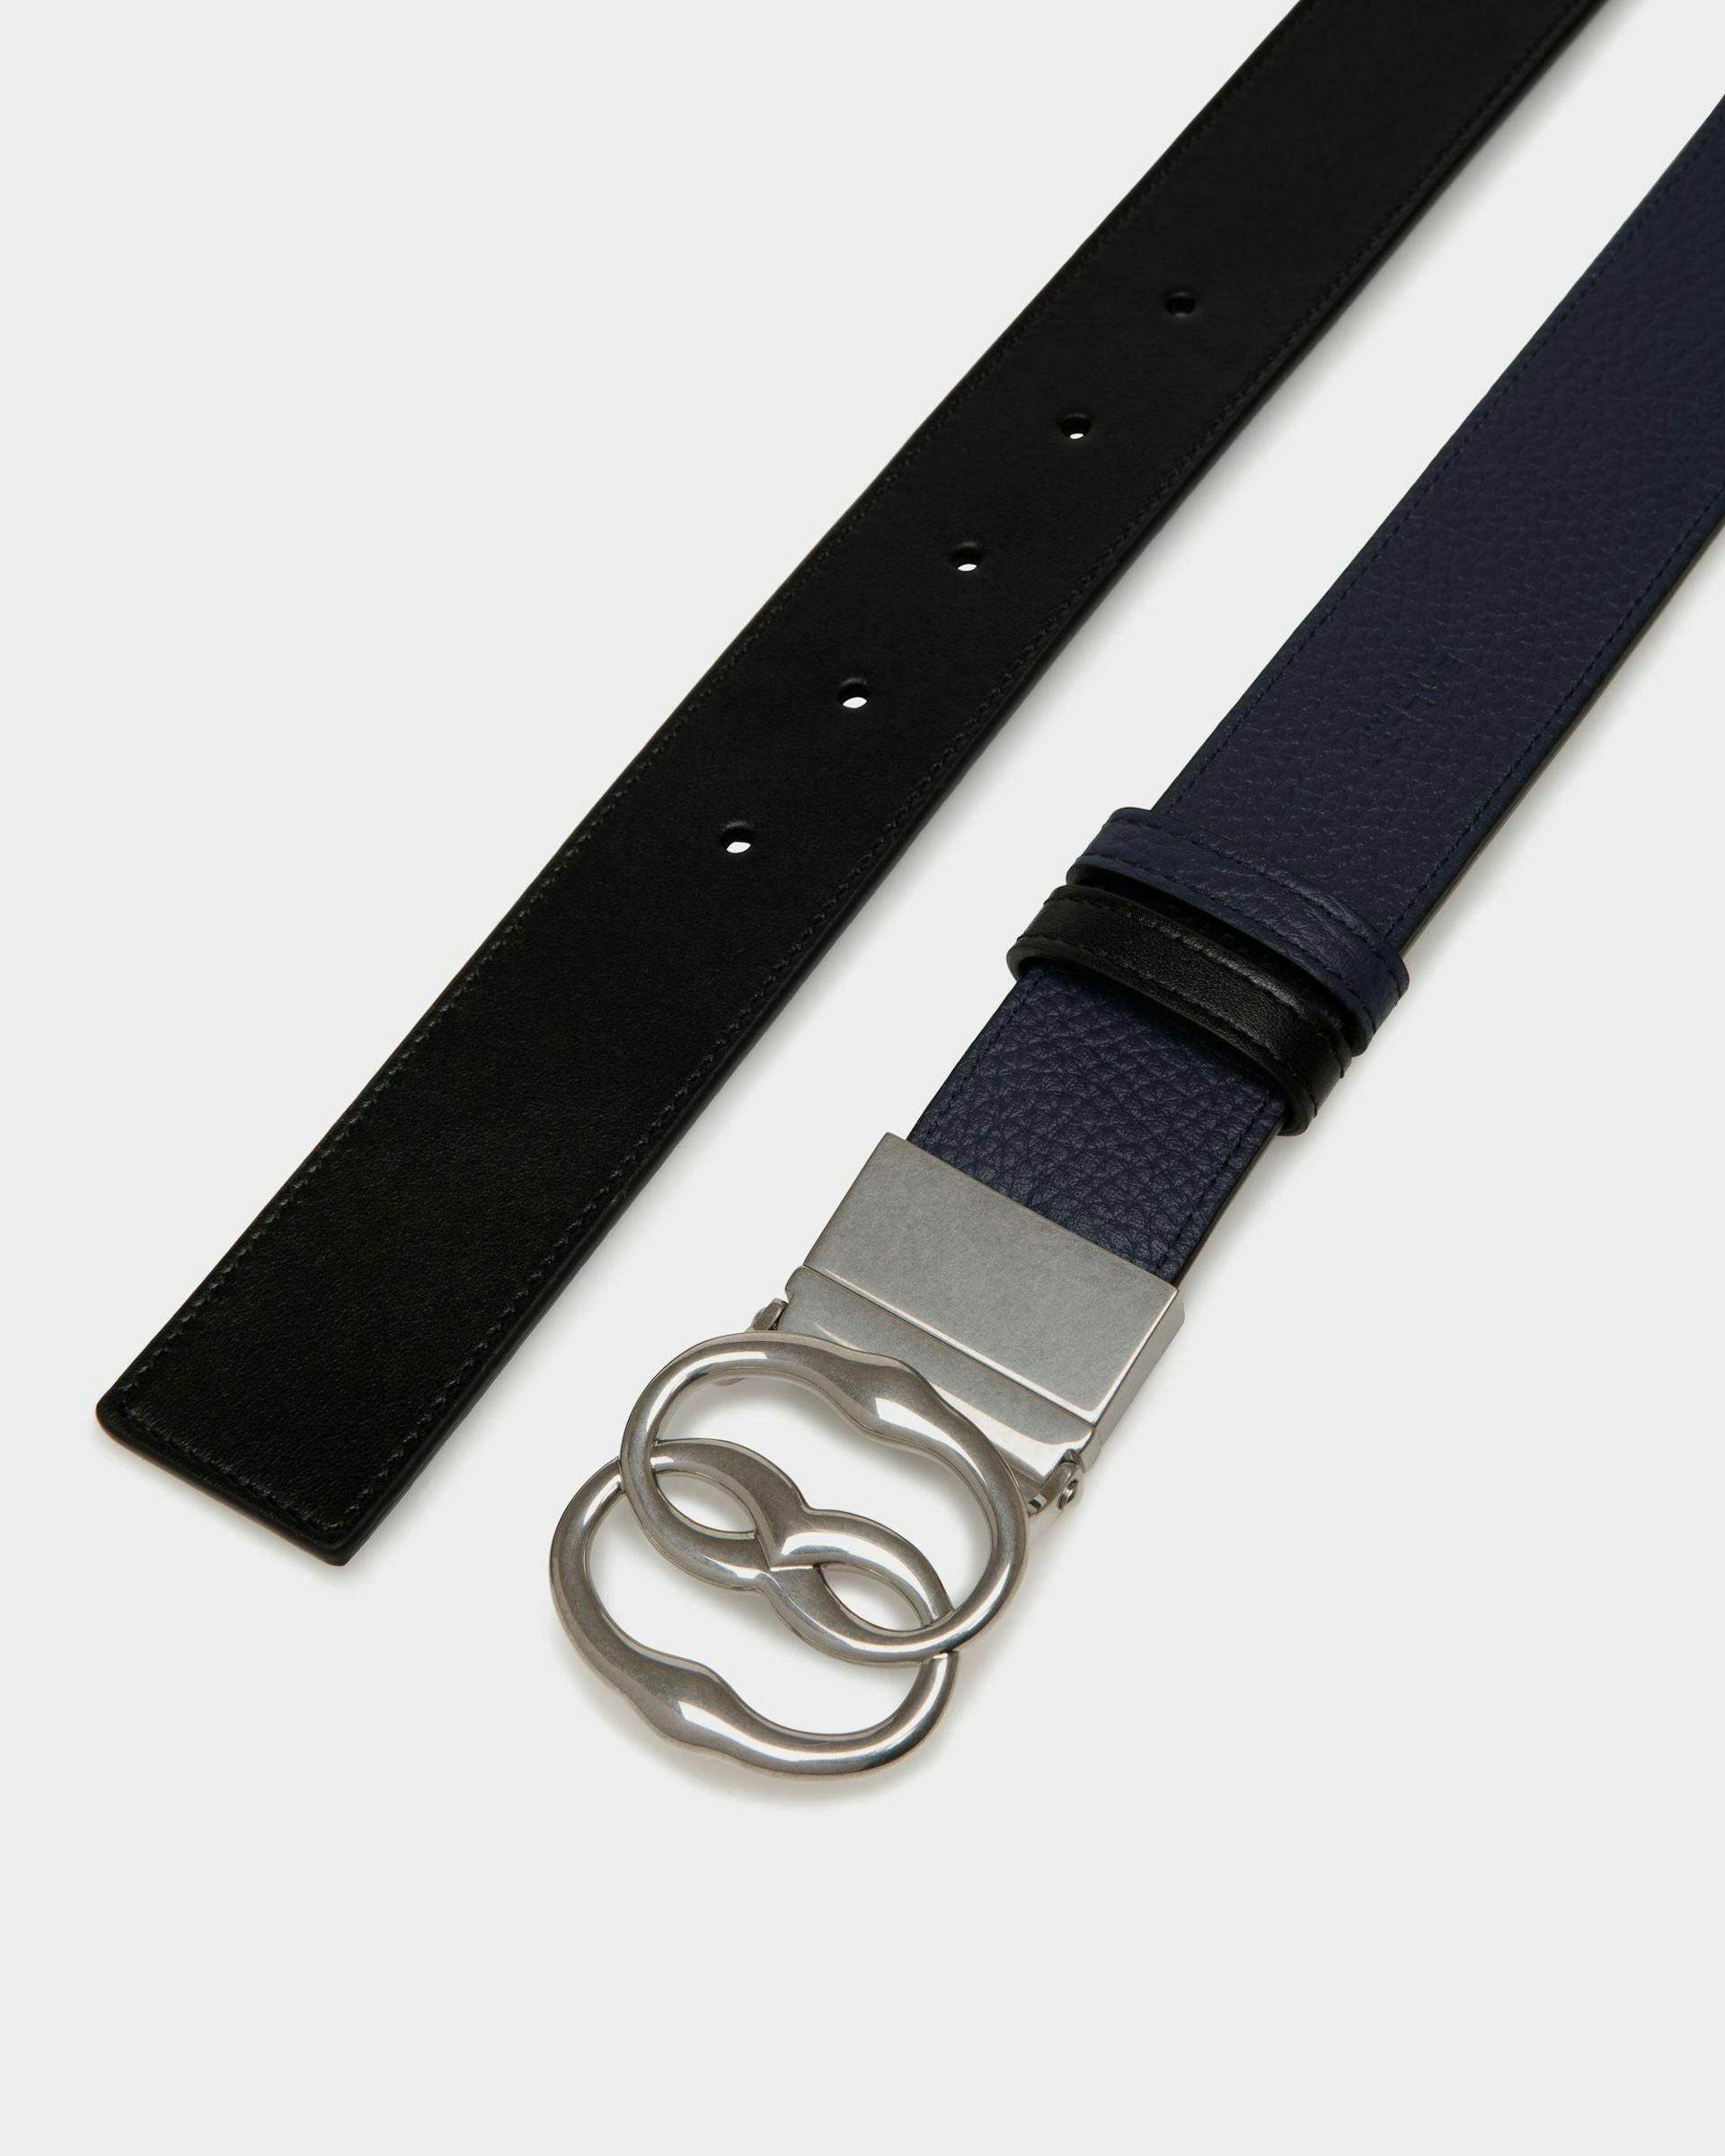 Men's Emblem 35mm Reversible And Adjustable Belt in Black And Blue Leather | Bally | Still Life Detail